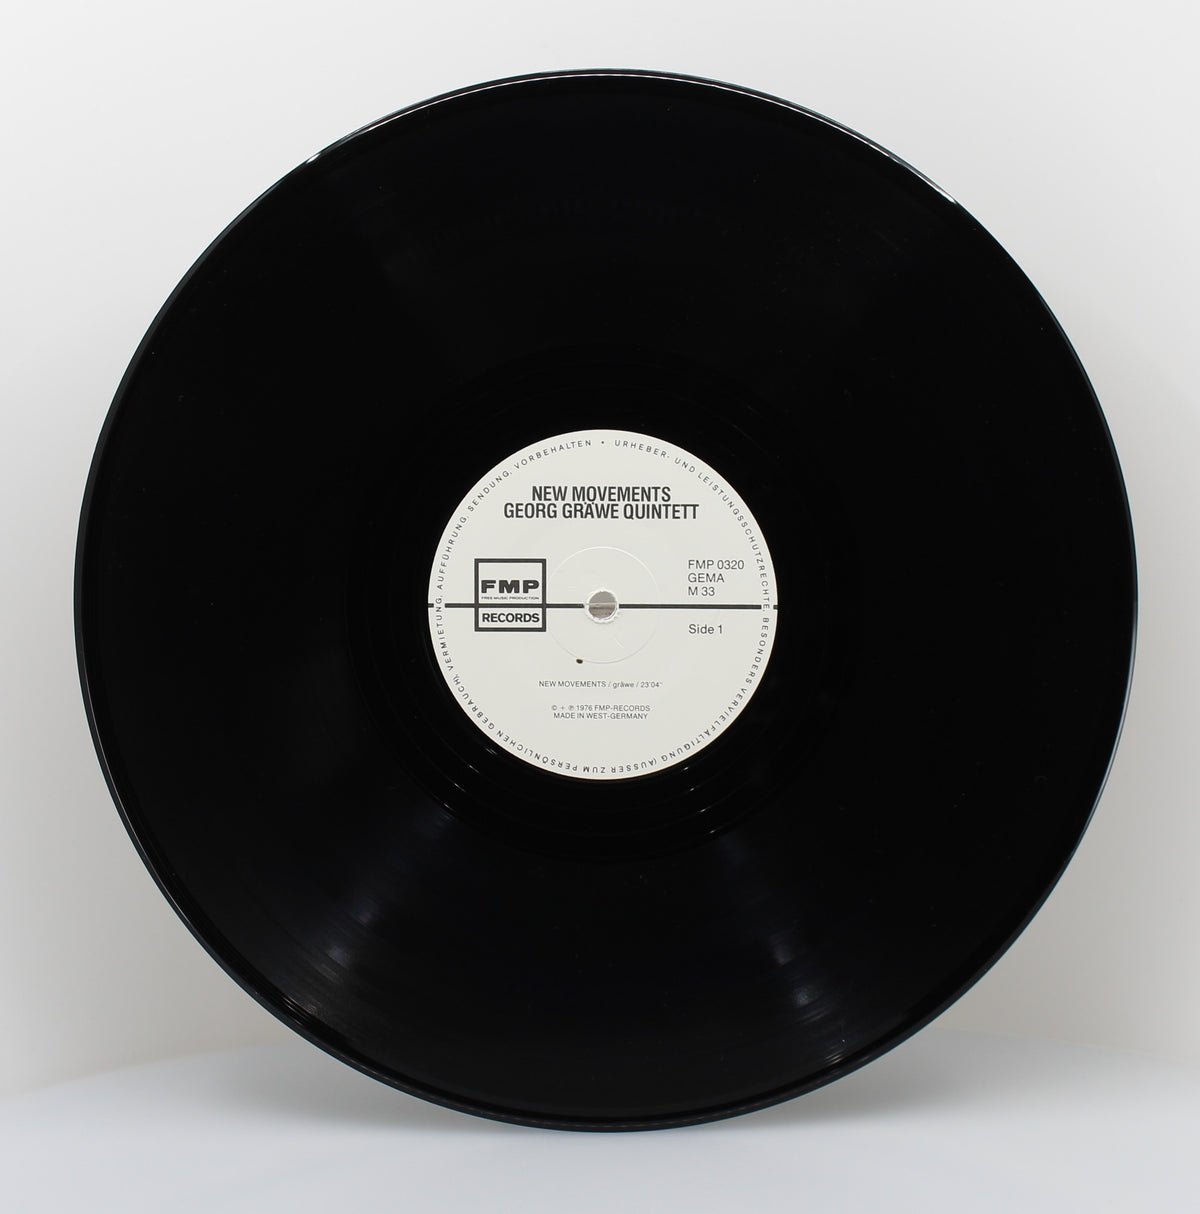 Georg Gräwe Quintett – New Movements, Vinyl, LP, Album, Jazz, Germany 1976